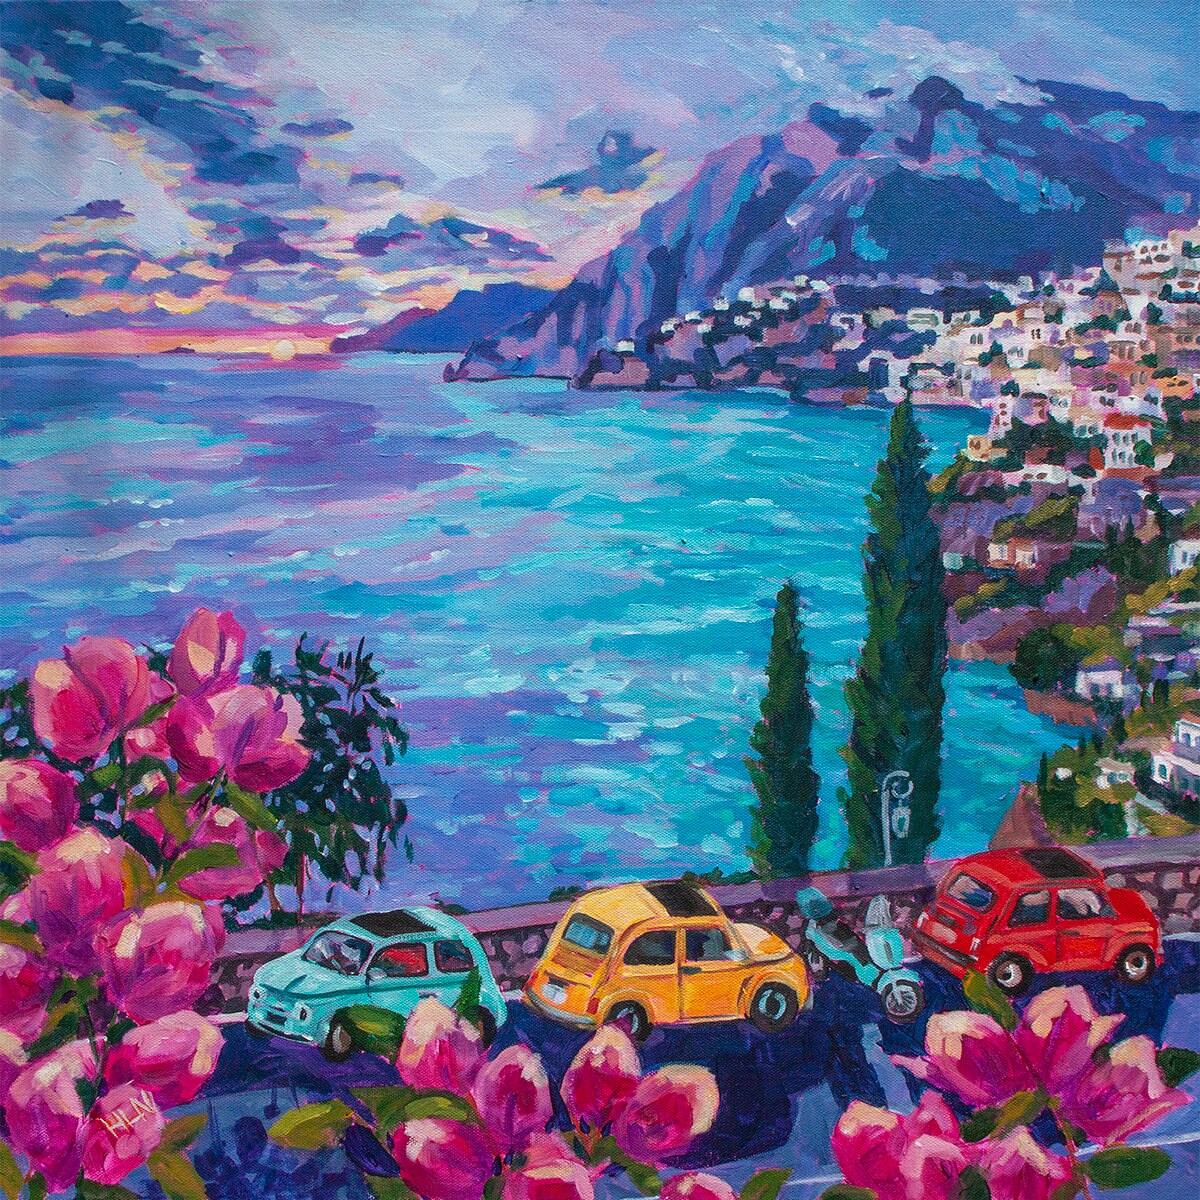 Sunset painting of Fiats at Arienzo in Positano Italy along the mountainous Amalfi coast